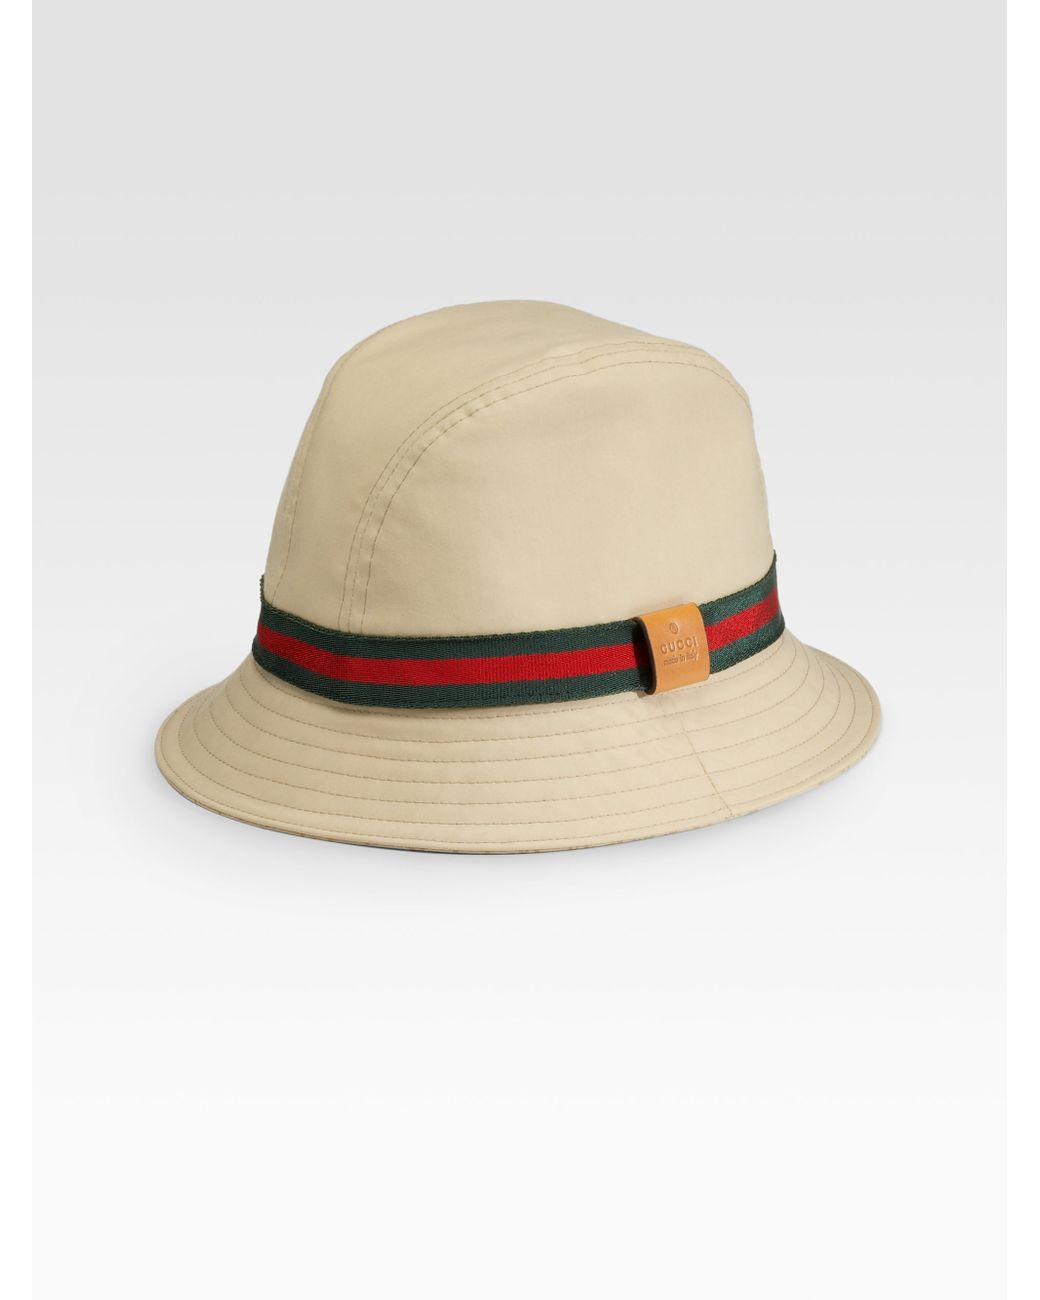 Gucci Men's GG Canvas Bucket Hat